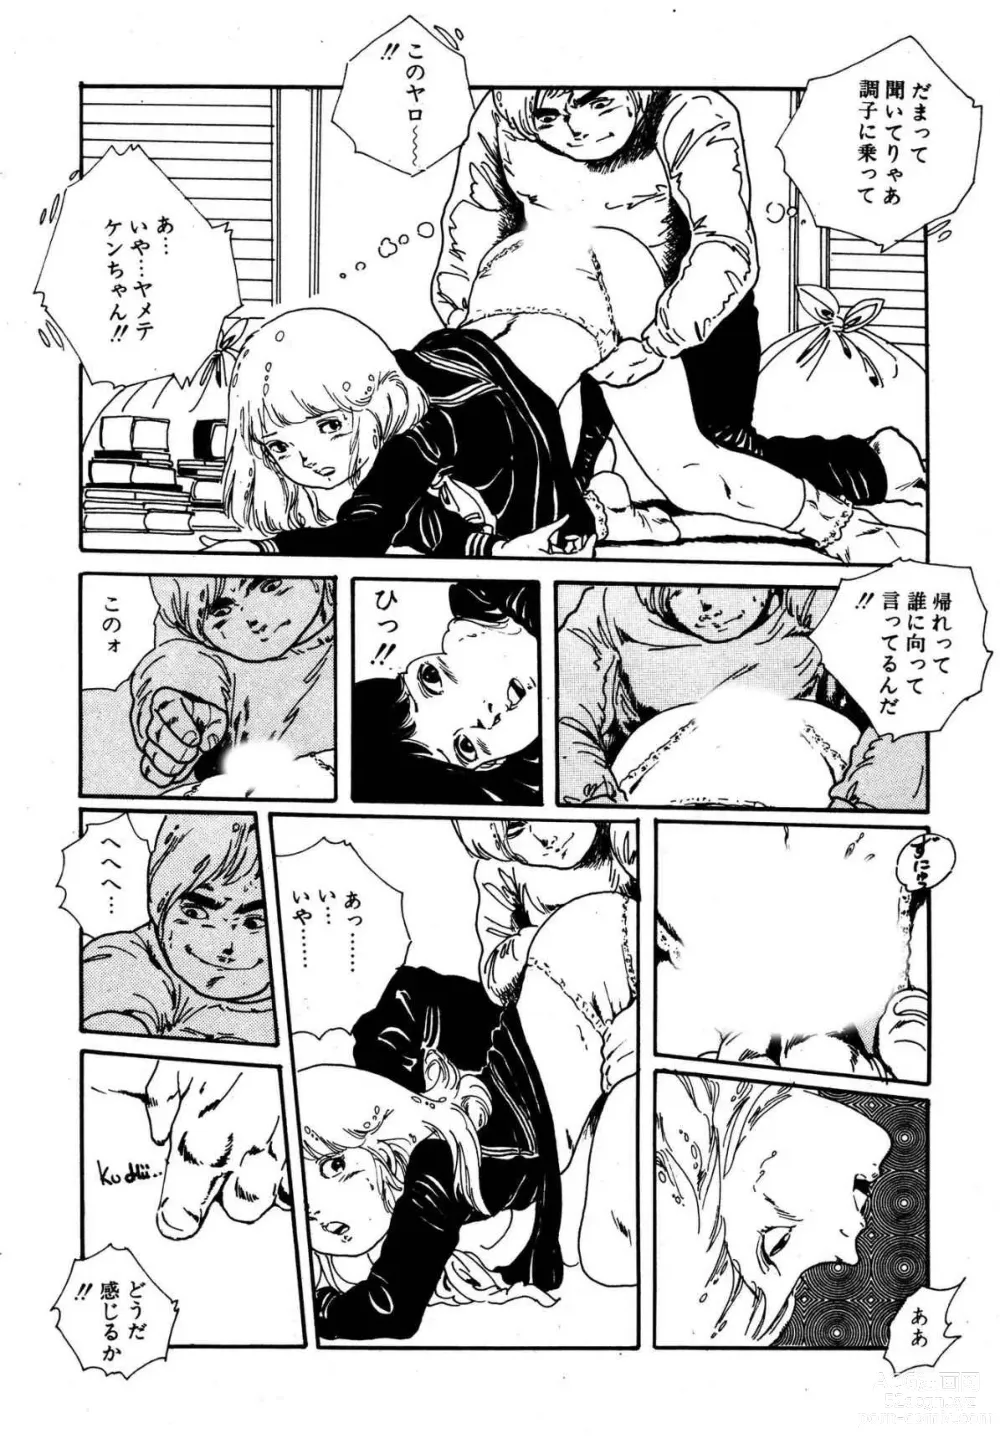 Page 10 of manga Dreaming fairy